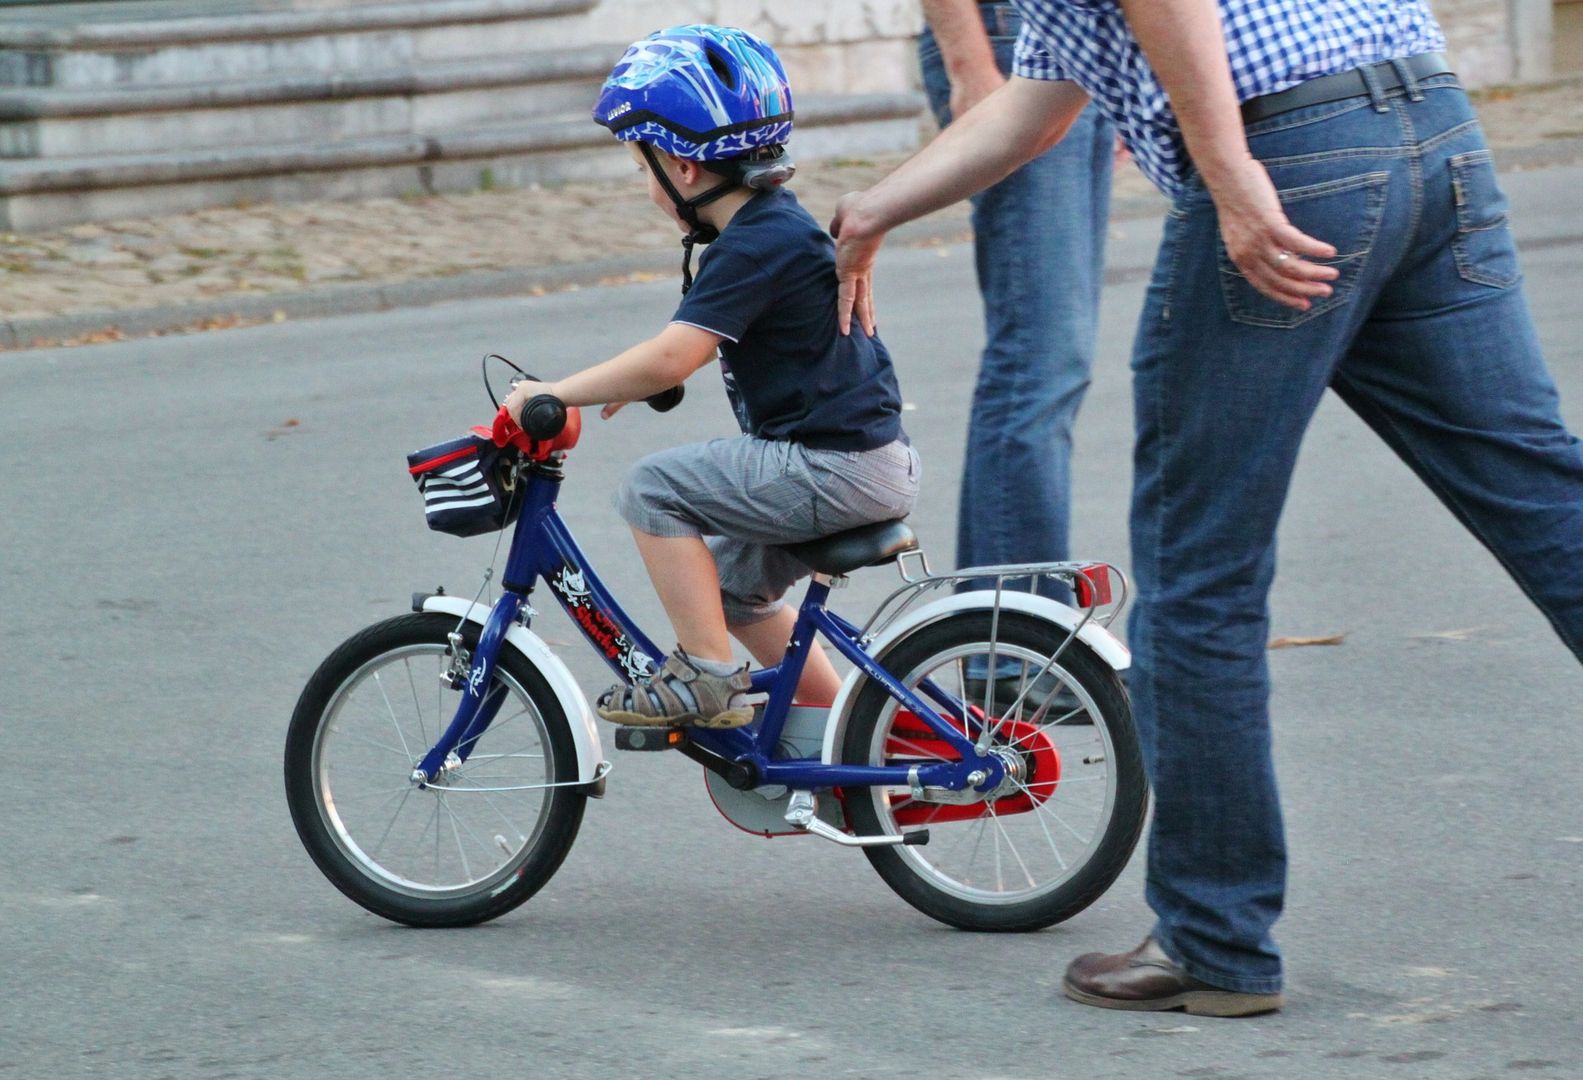 Kind das Fahrrad fahren lernt